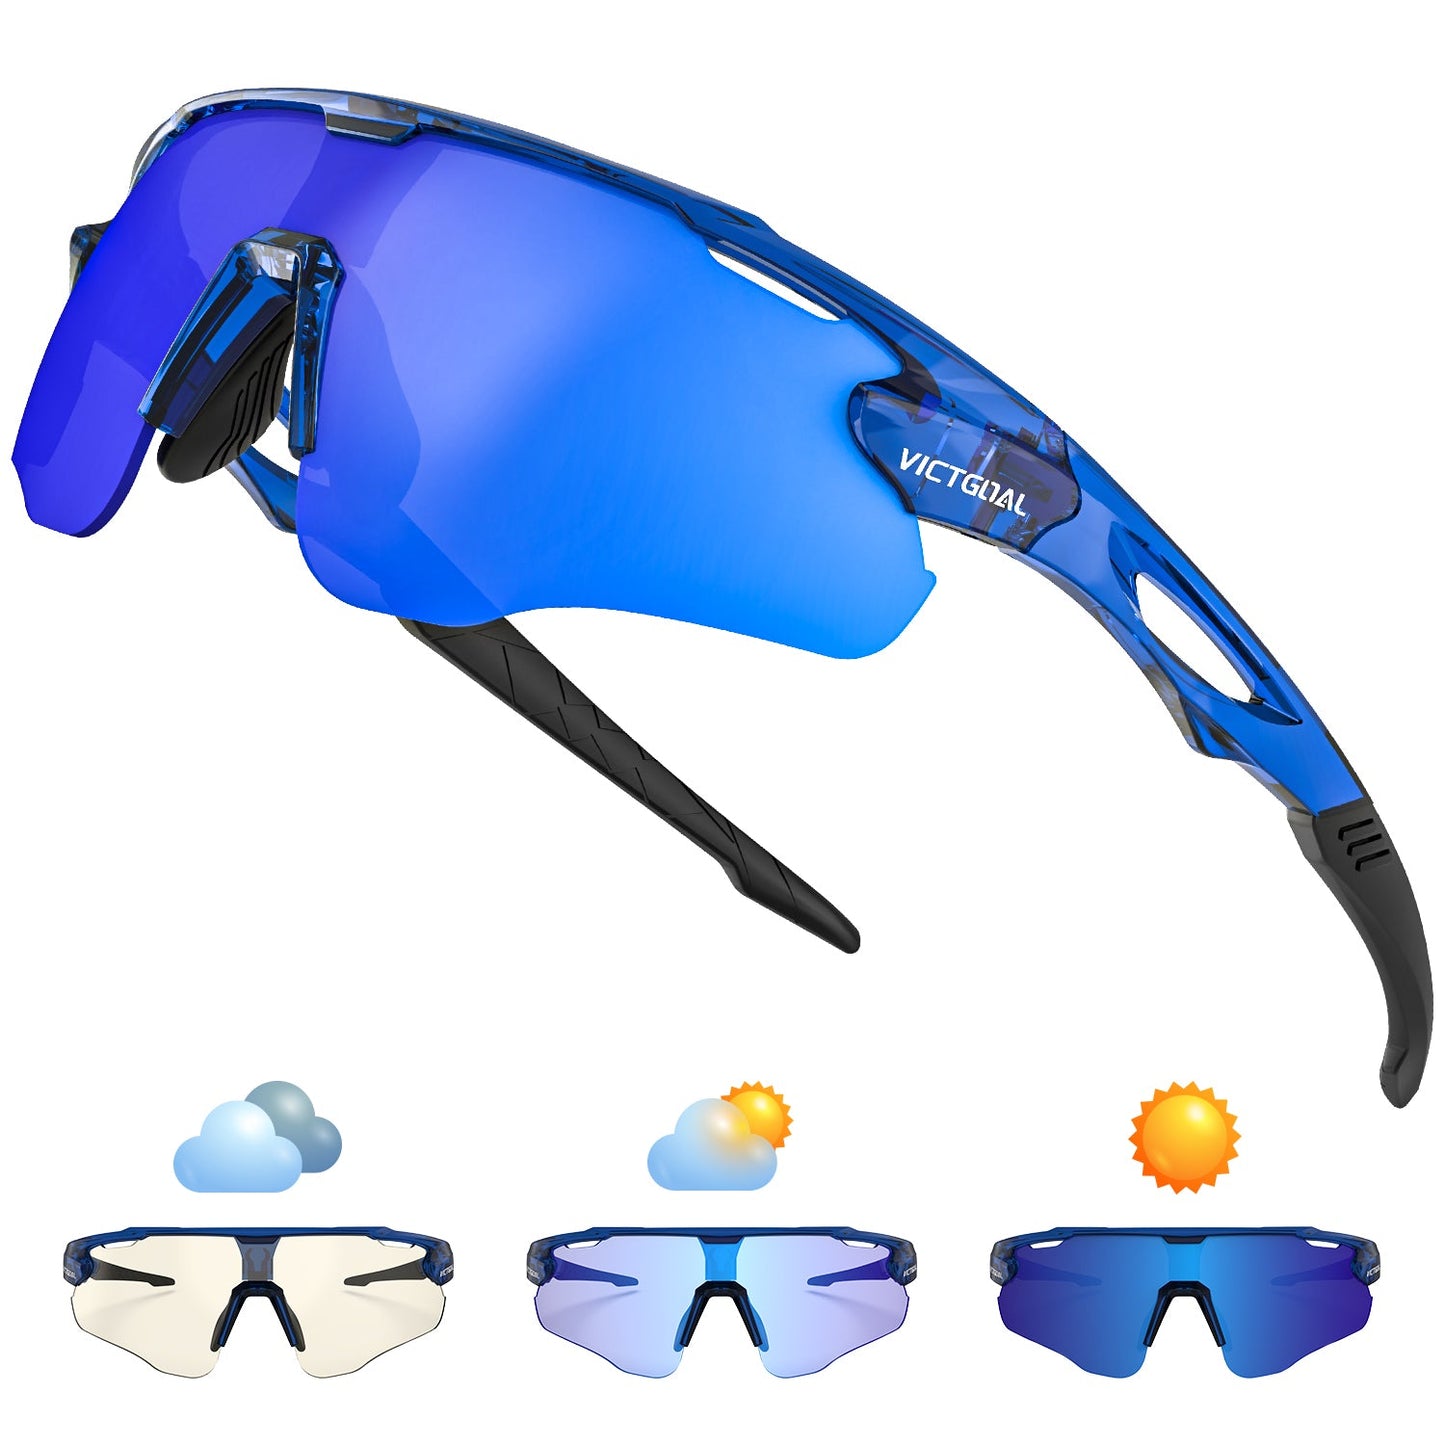 Photochromic Sports Sunglasses Baseball Cycling Runing Eywear Goggles VICTGOAL accessories apparel eyewears